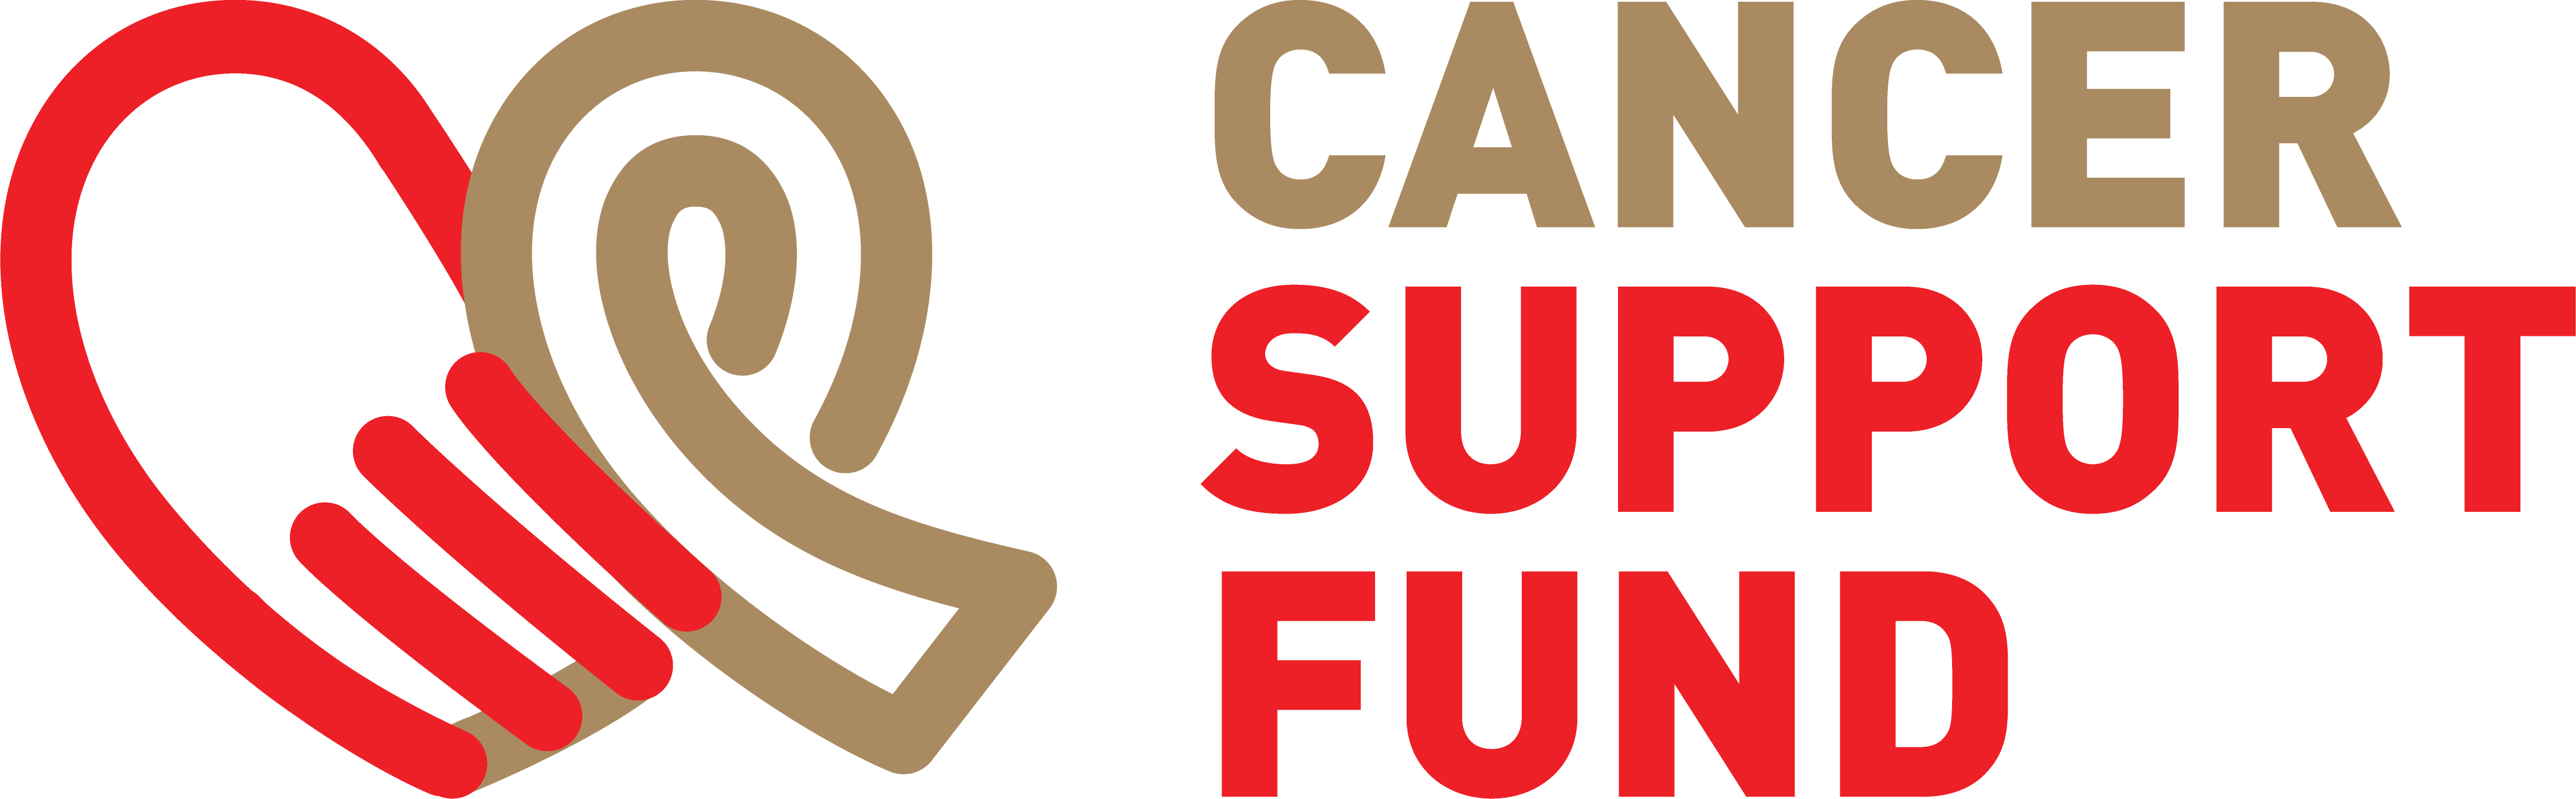 cancer support fund